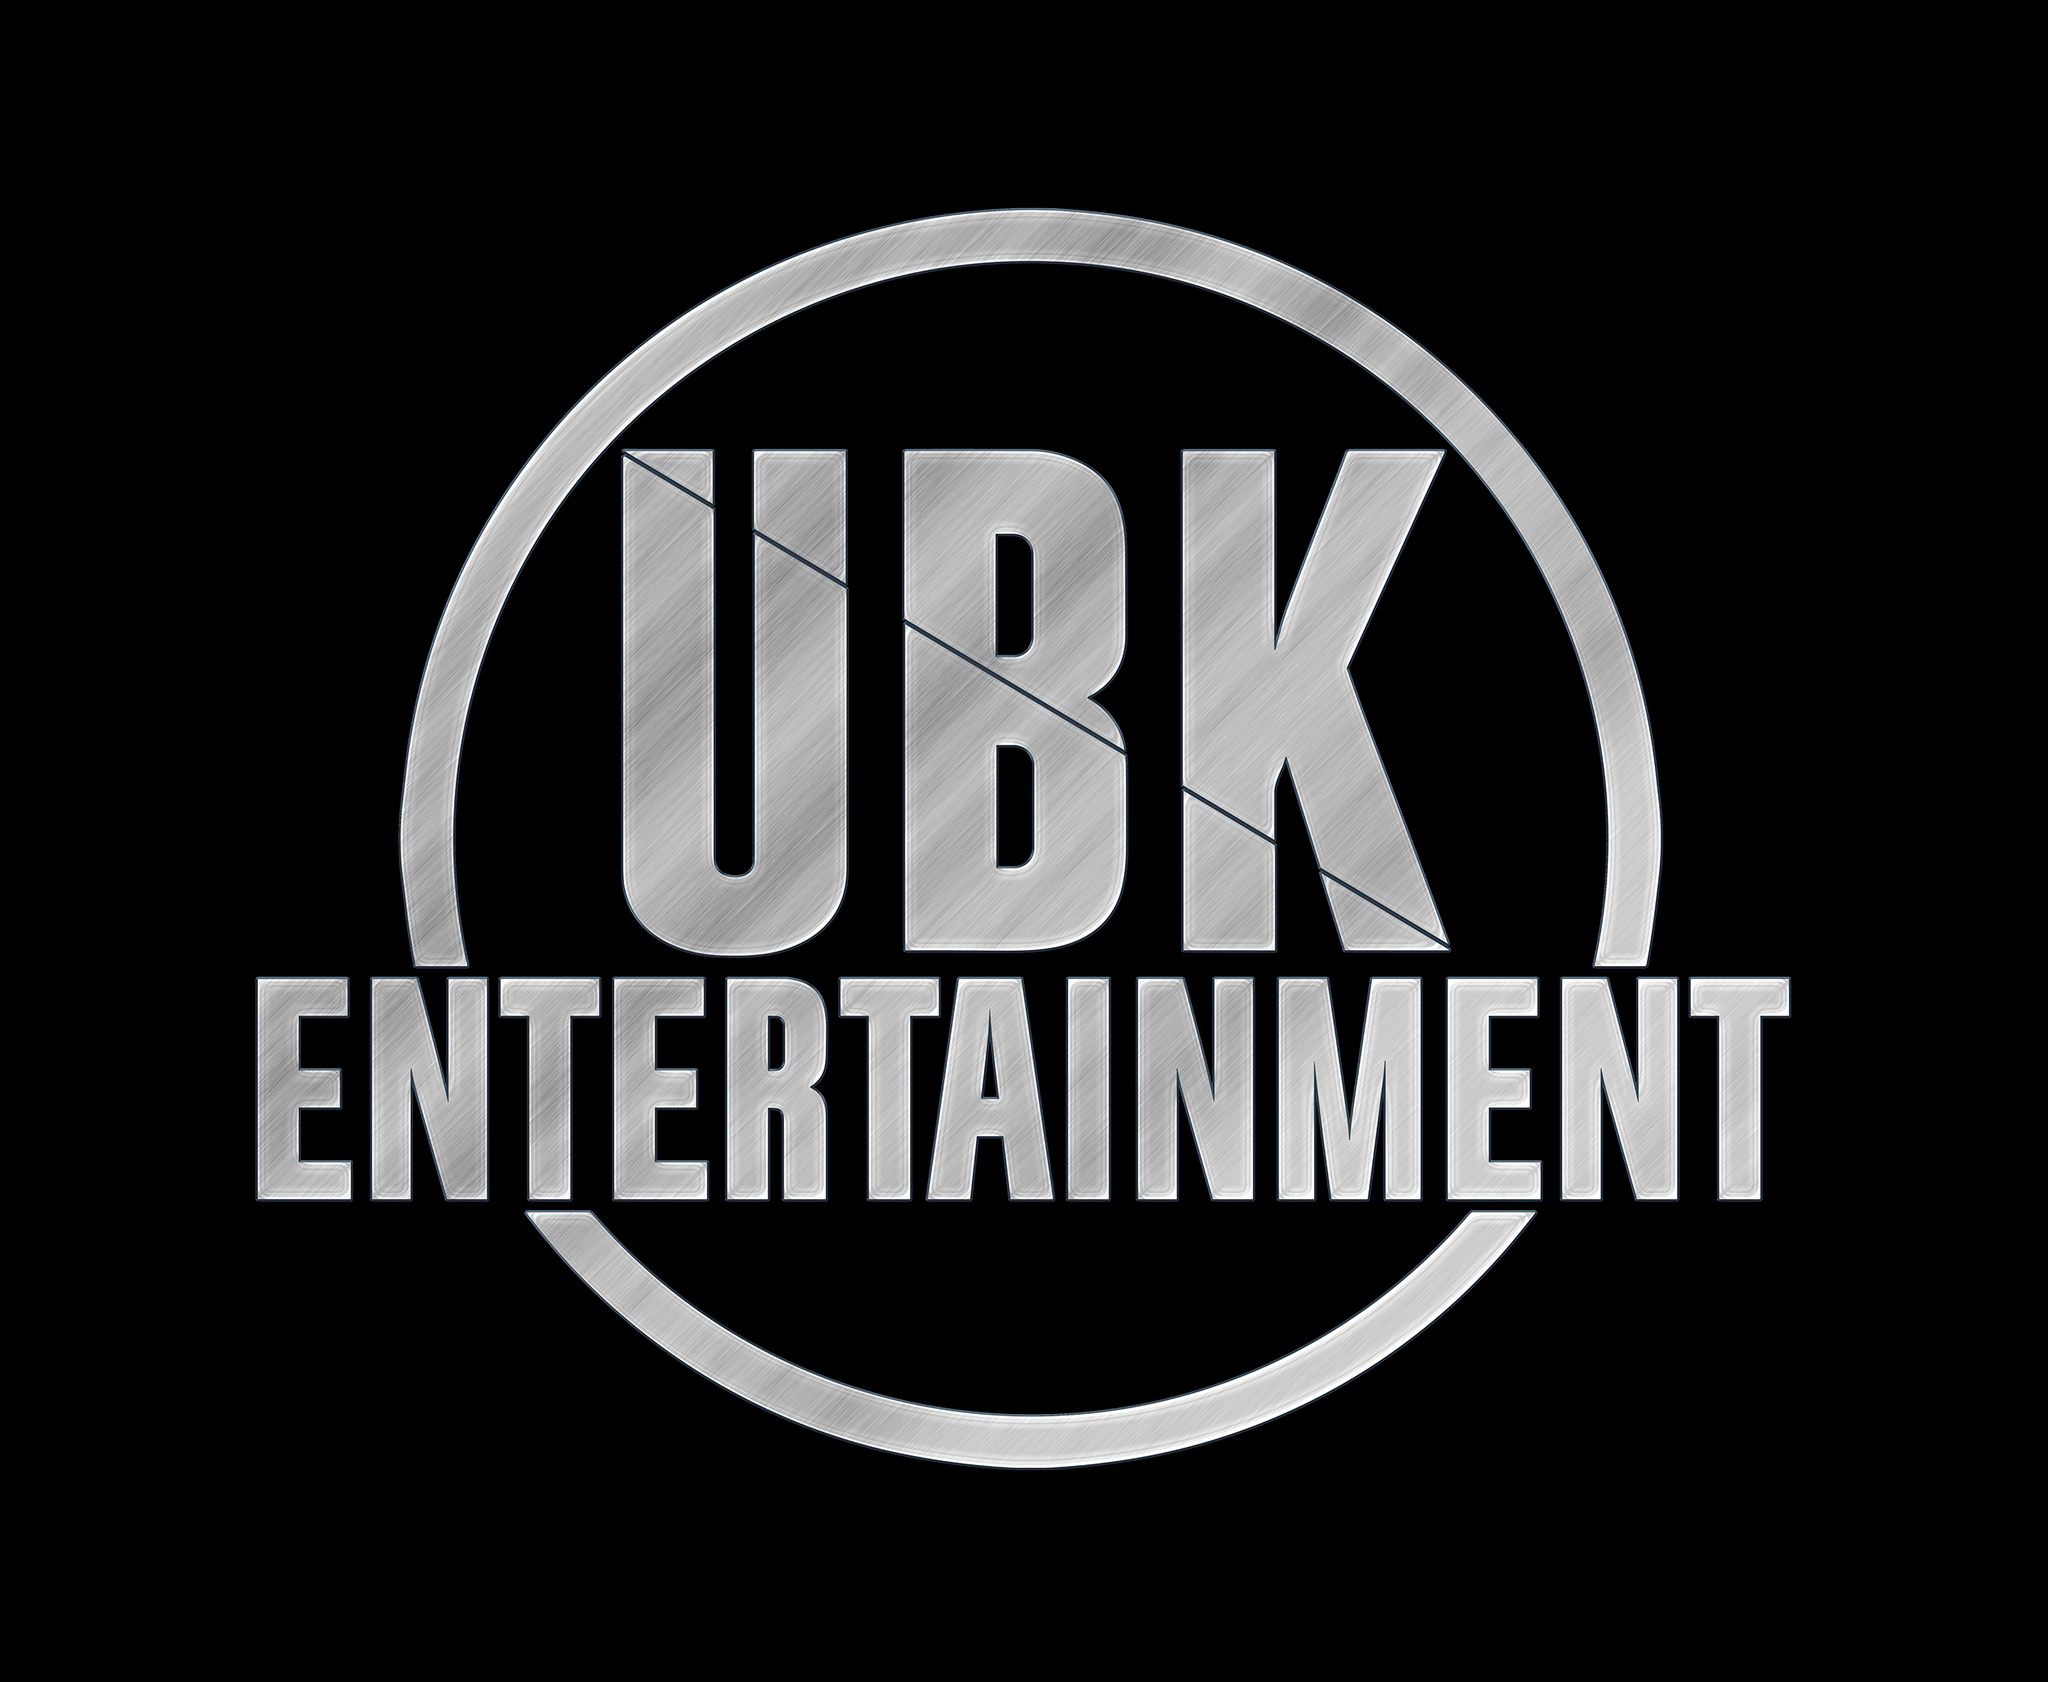 UBK Entertainment